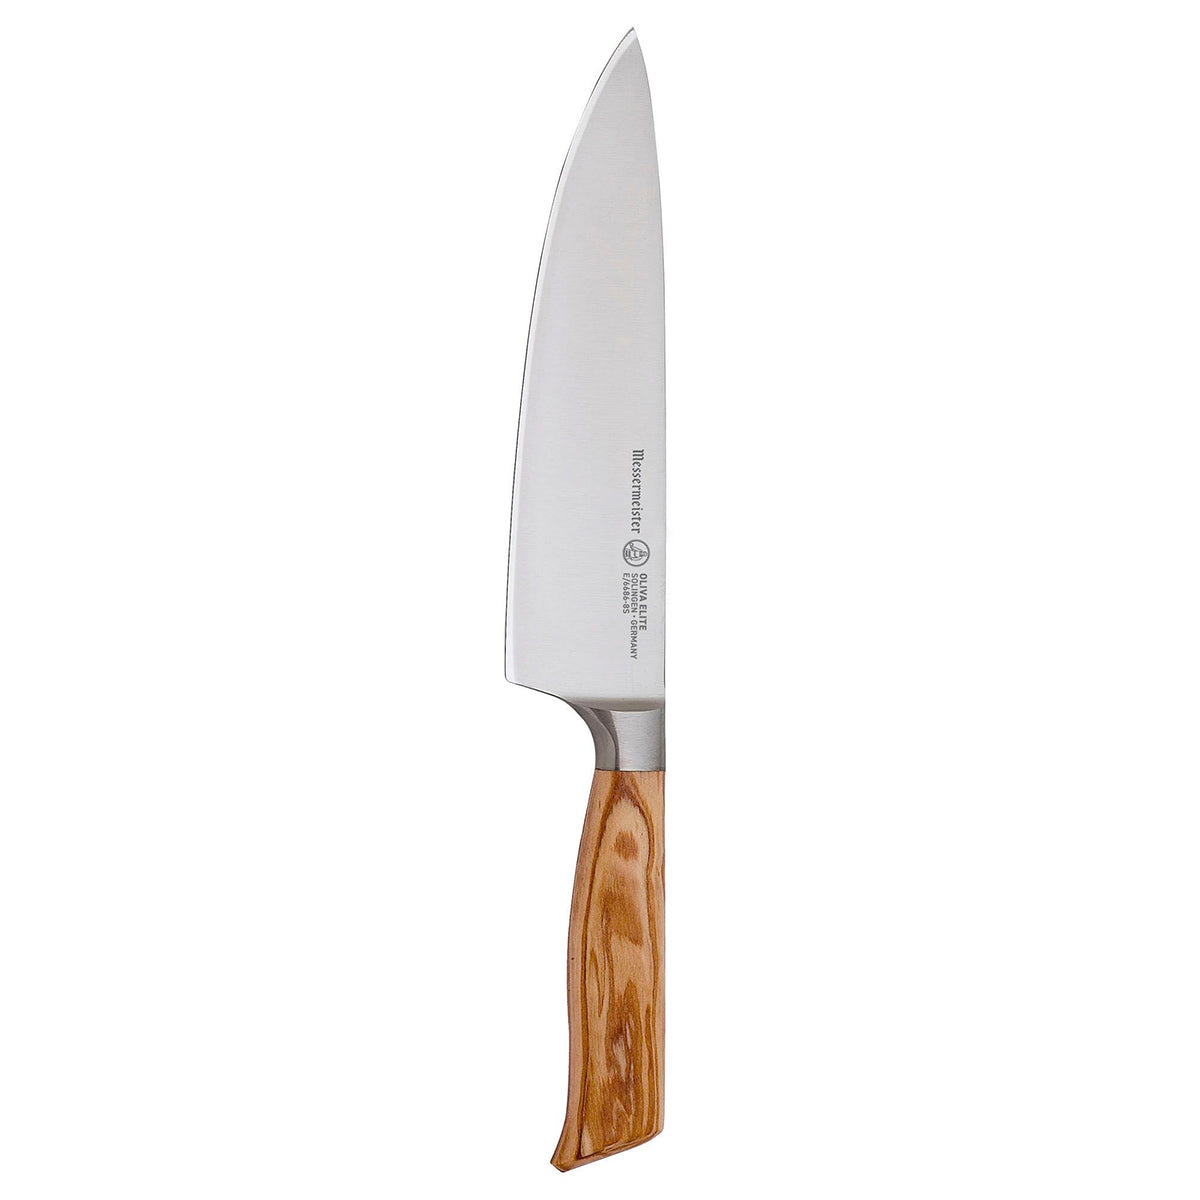 Kitchen Knives - Super Sharp - Made in Germany - Beige Color